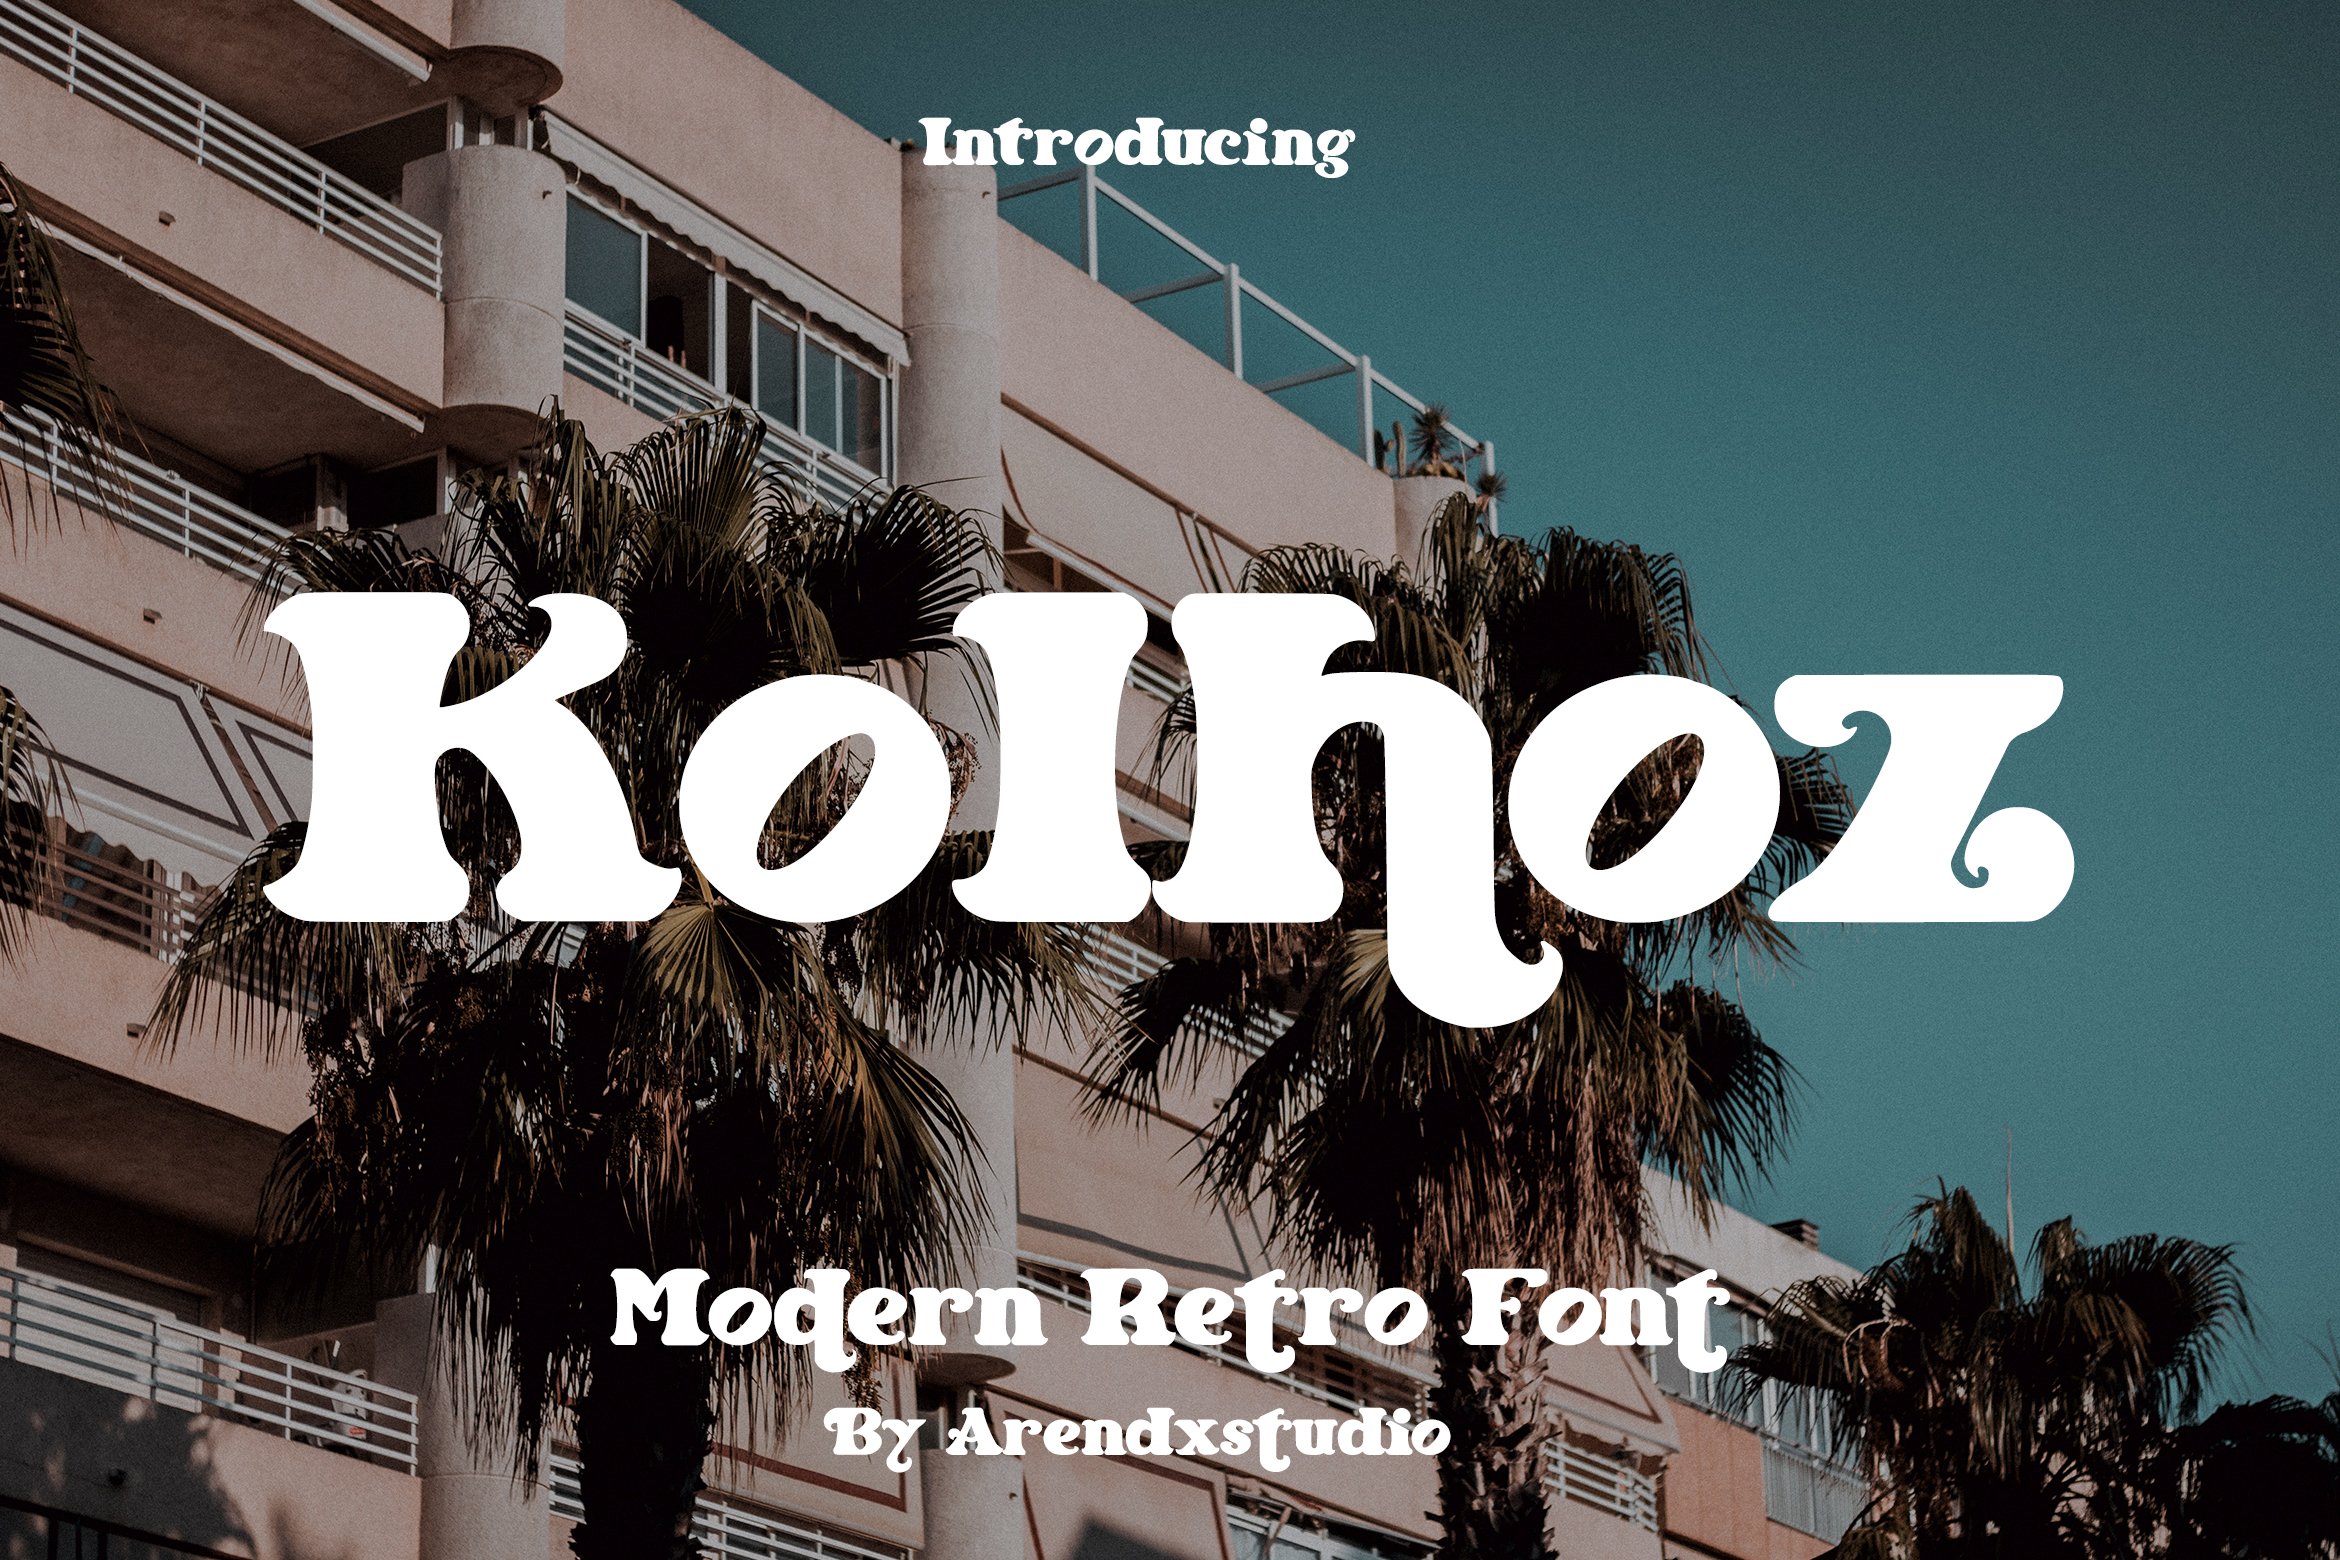 Kolhoz - Modern Retro Font cover image.